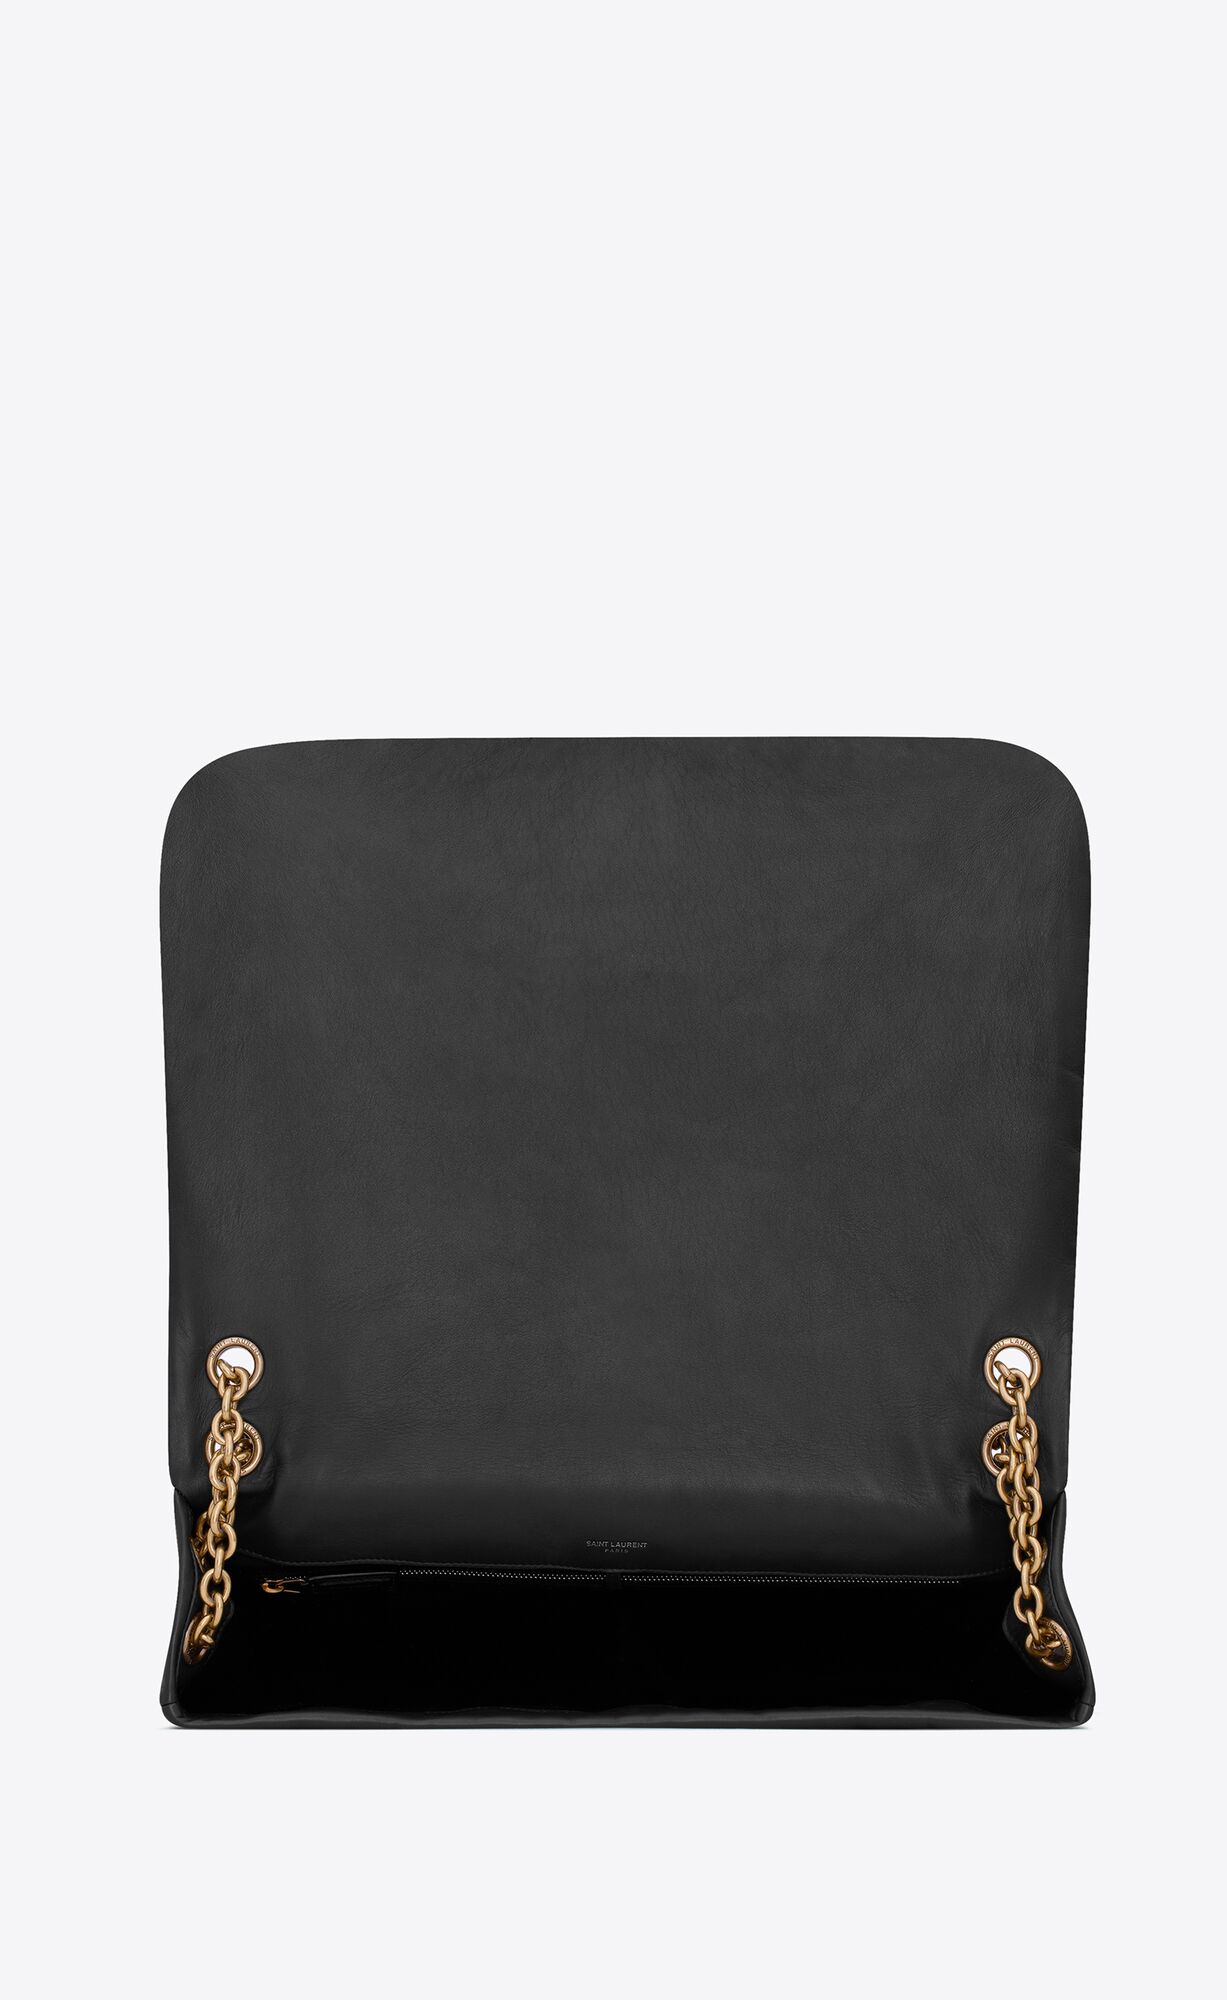 Bella Hadid Wore a $10,000 Chanel Messenger Bag